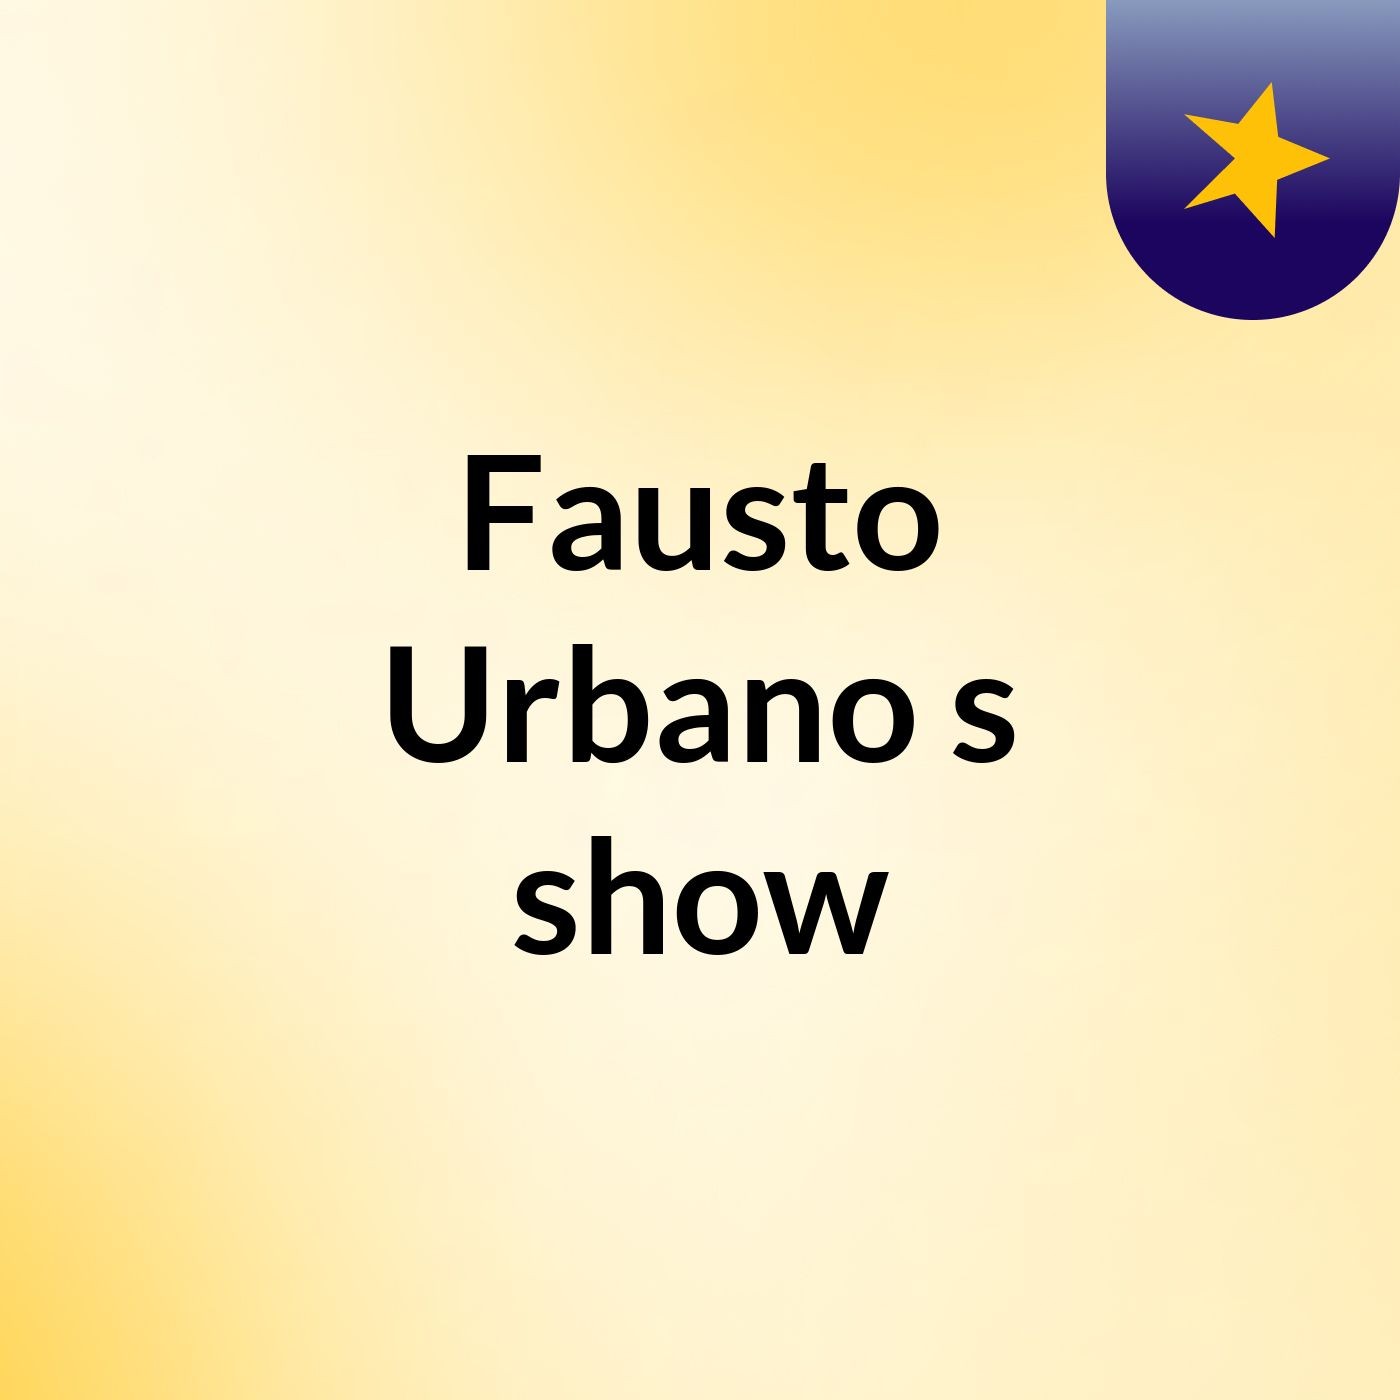 Fausto Urbano's show